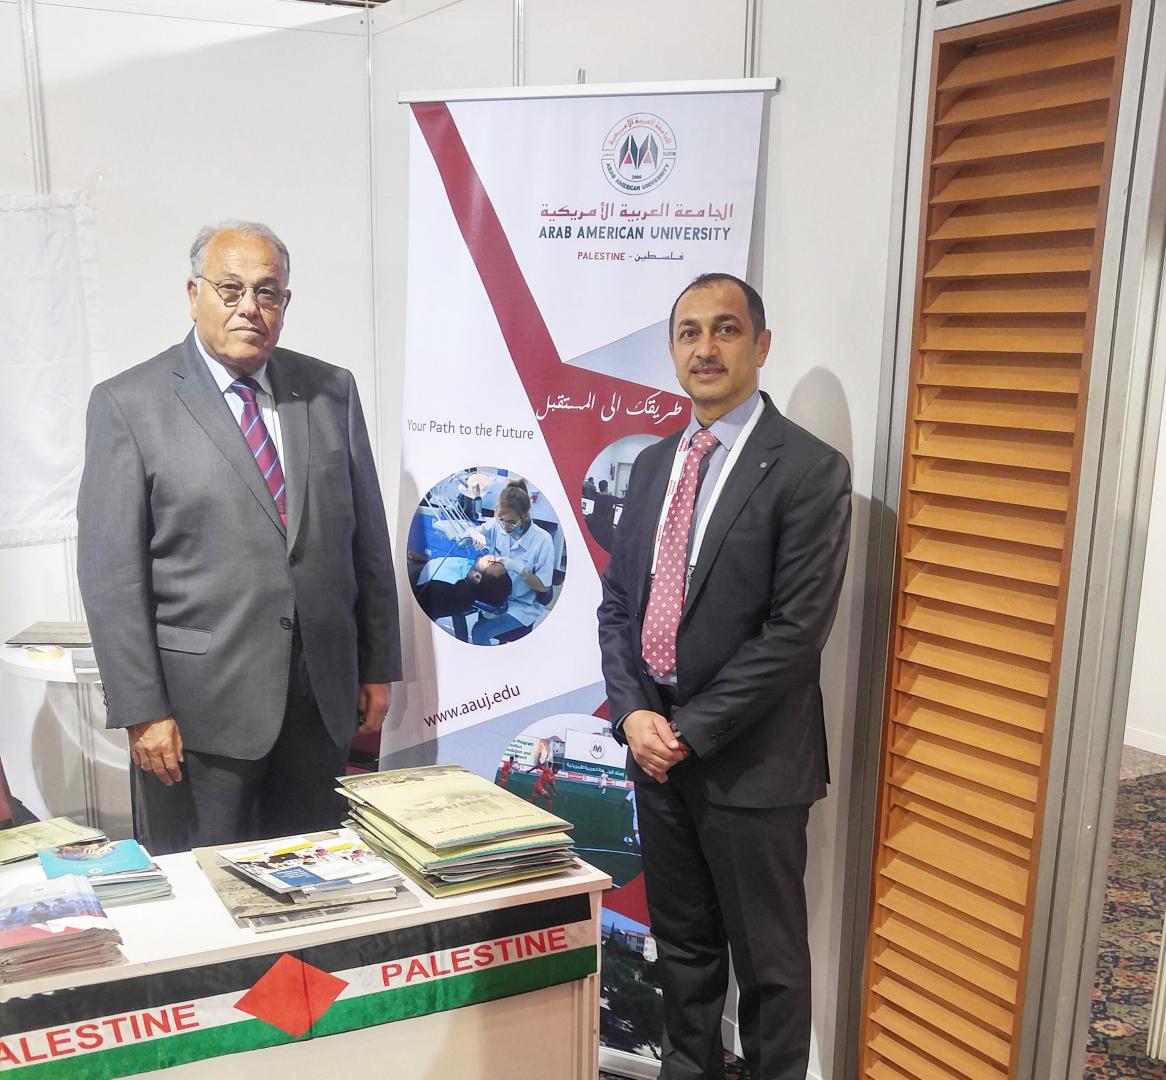 The University President Prof. Dr. Ali Zeidan Abu Zuhri and his Advisor for Universities Classification Dr. Moath Sabha